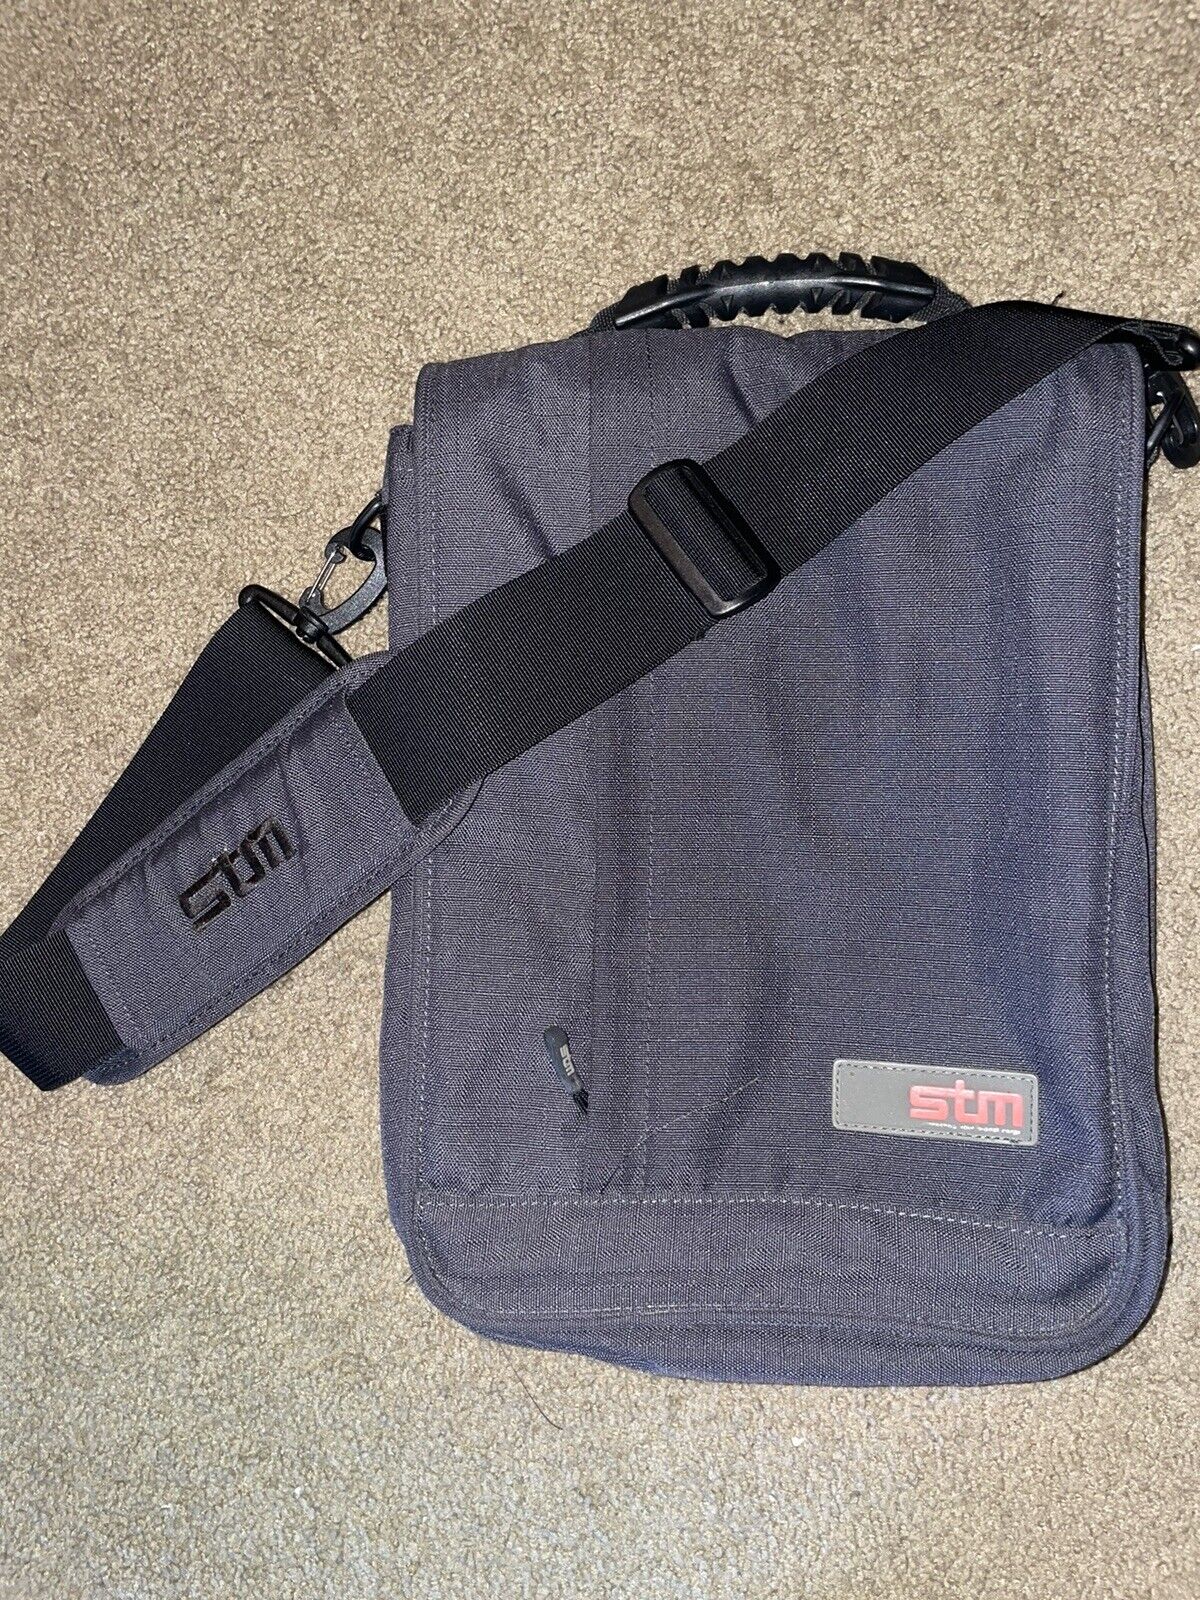 STM Protecting Your Digital Cargo Laptop Computer Crossbody Bag Travel